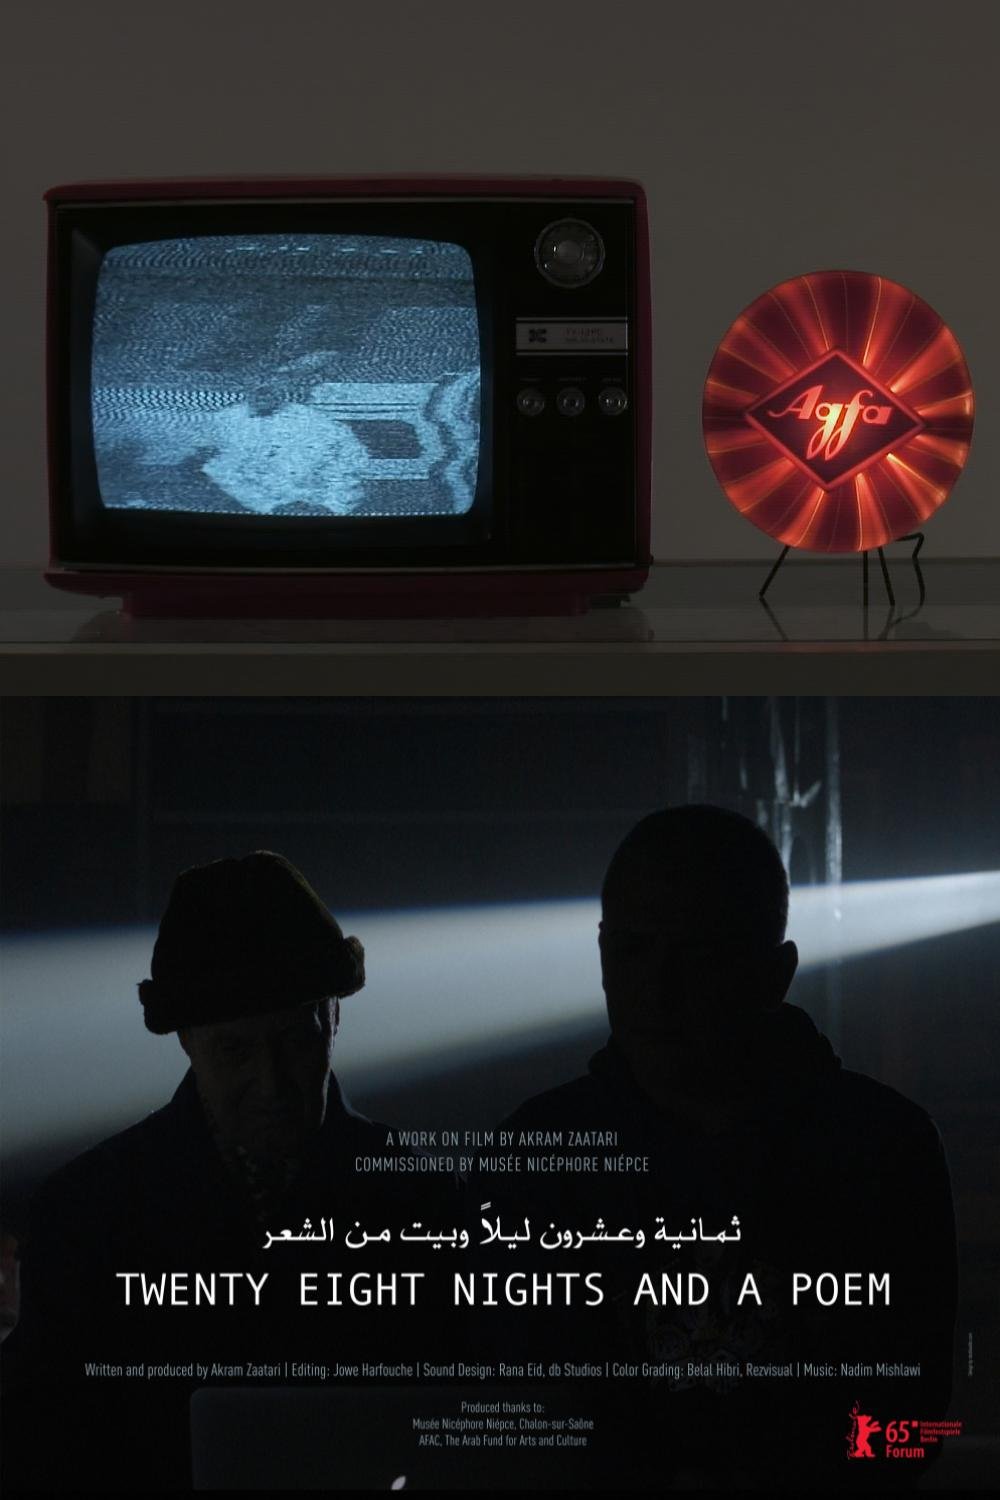 Poster of the movie Thamaniat wa ushrun laylan wa bayt min al-sheir